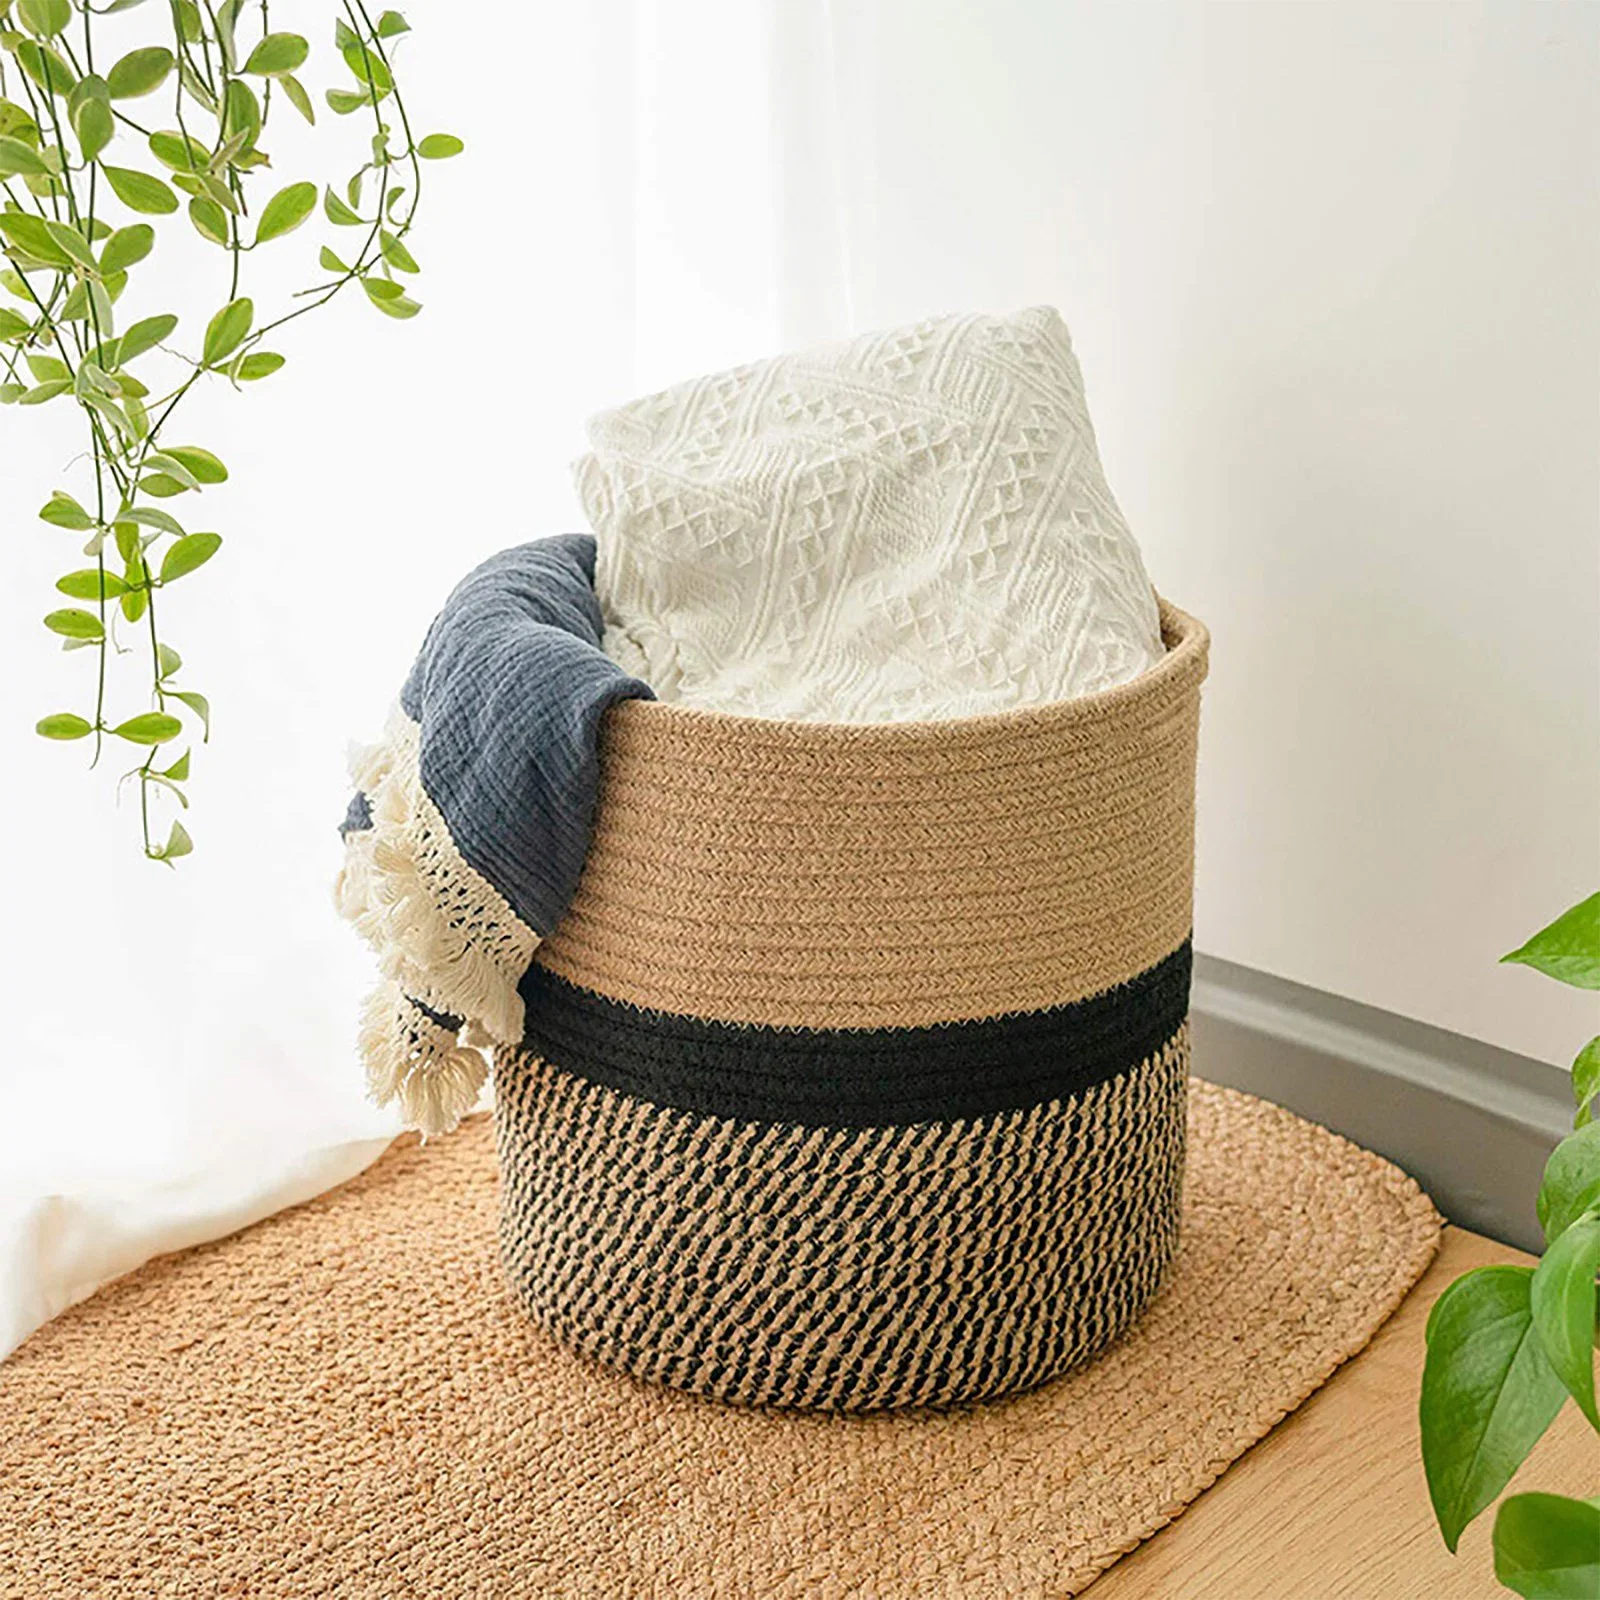 Household Flower Pot Bathroom Bedroom Laundry Basket Cotton Rope Storage Desktop Plant Organizer Decoration